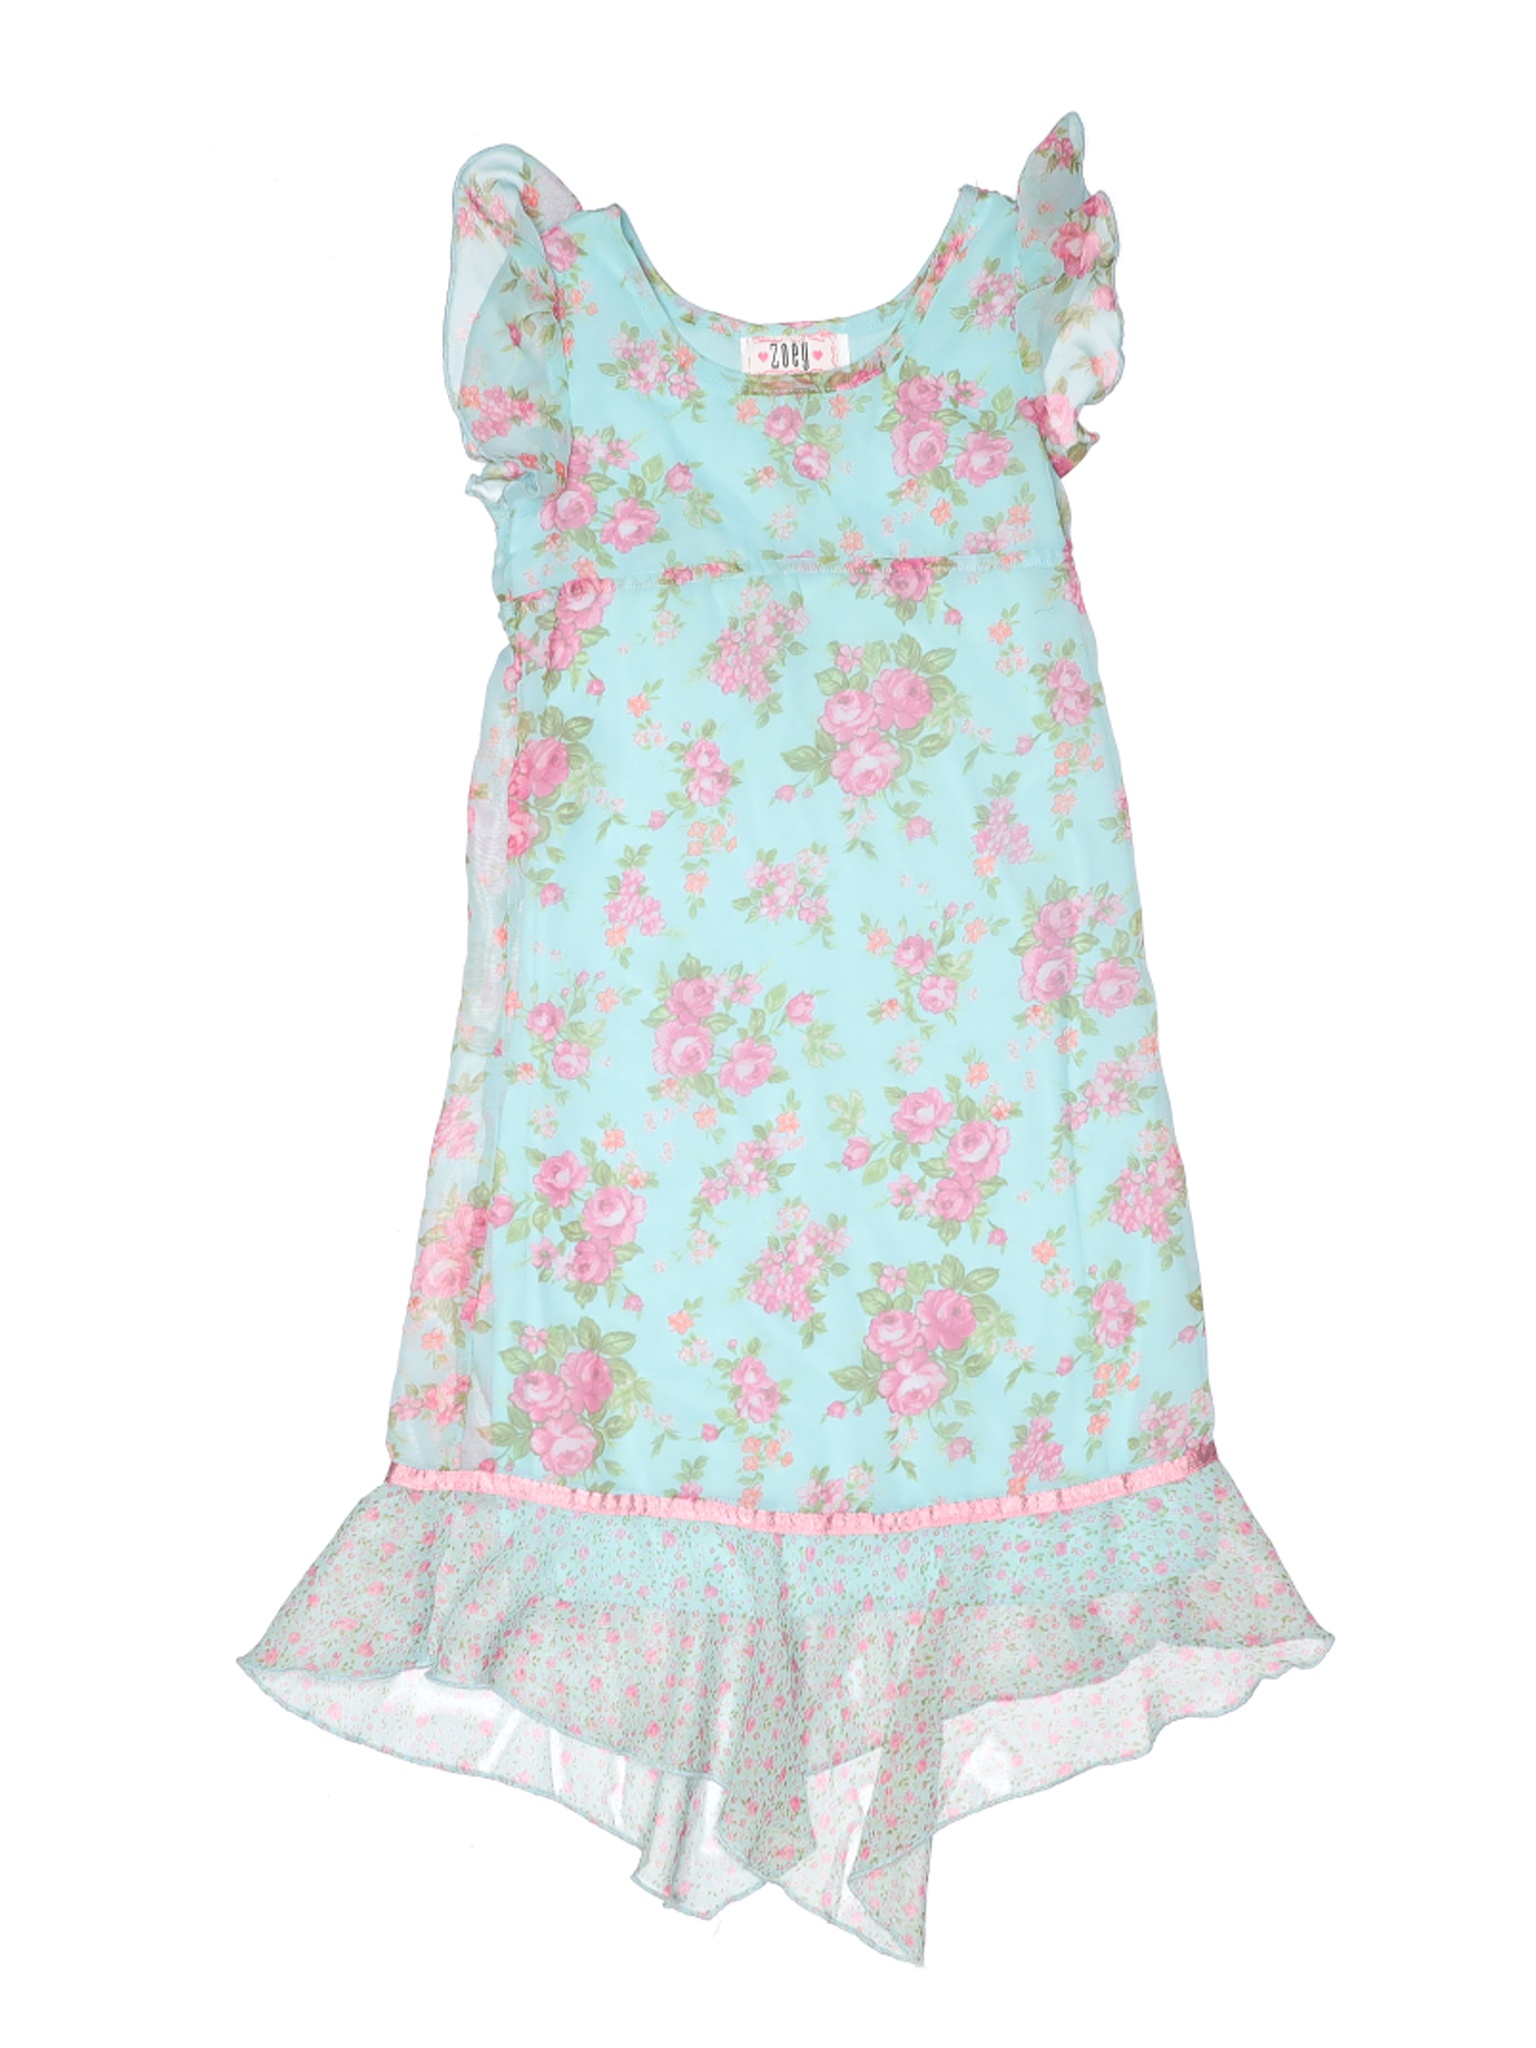 Zoey Girls Blue Dress 6 | eBay